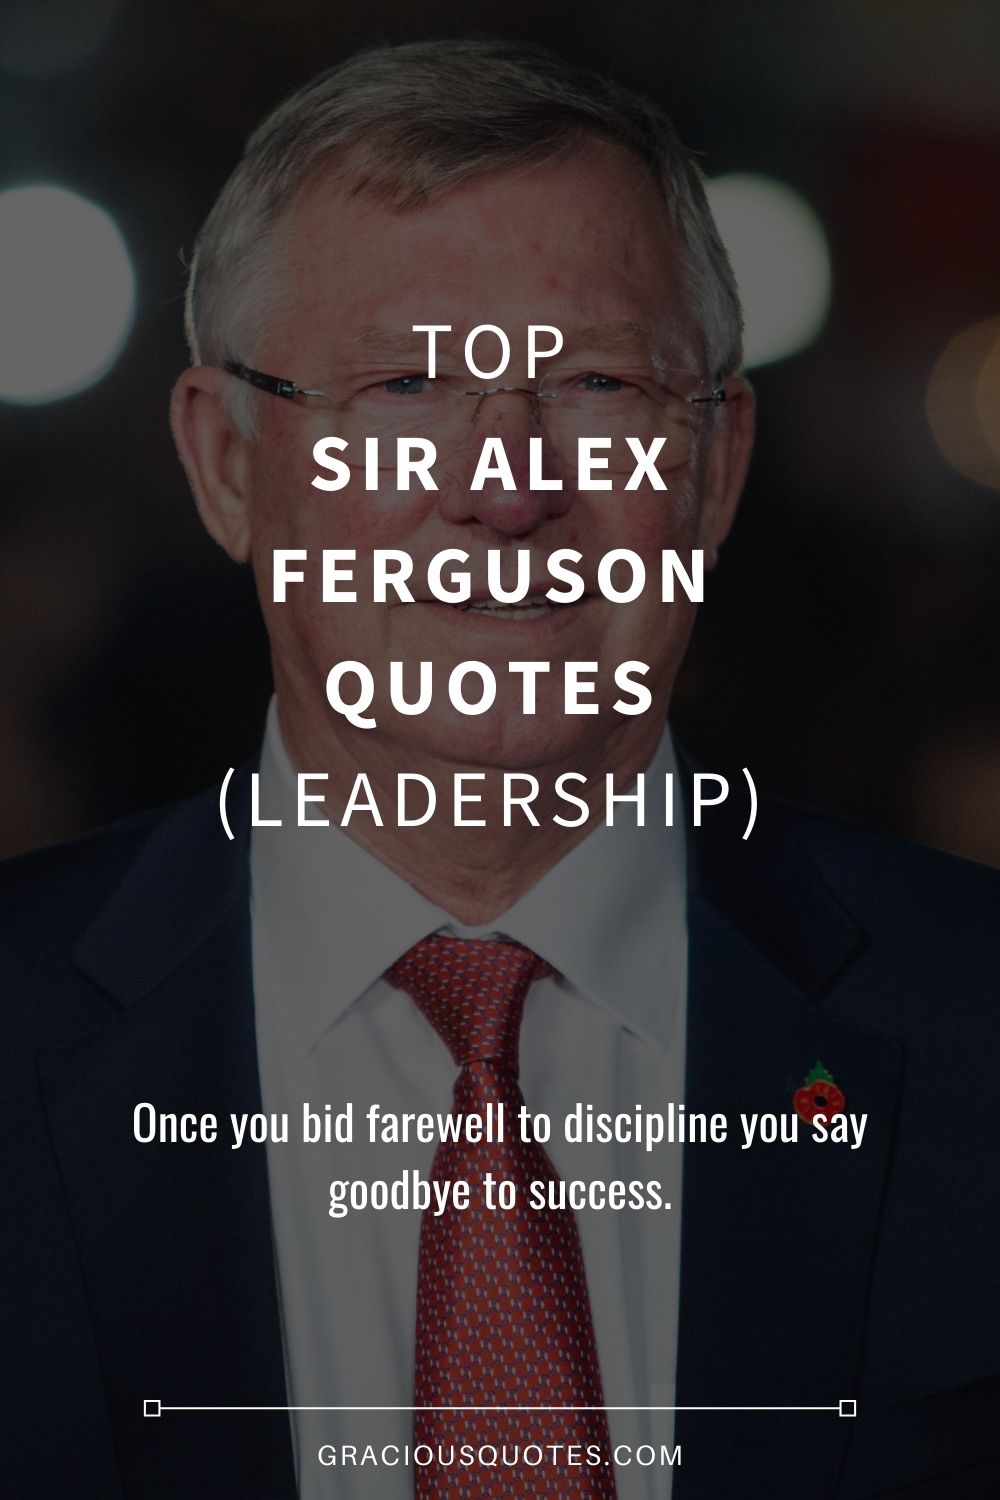 Top Sir Alex Ferguson Quotes (LEADERSHIP) - Gracious Quotes